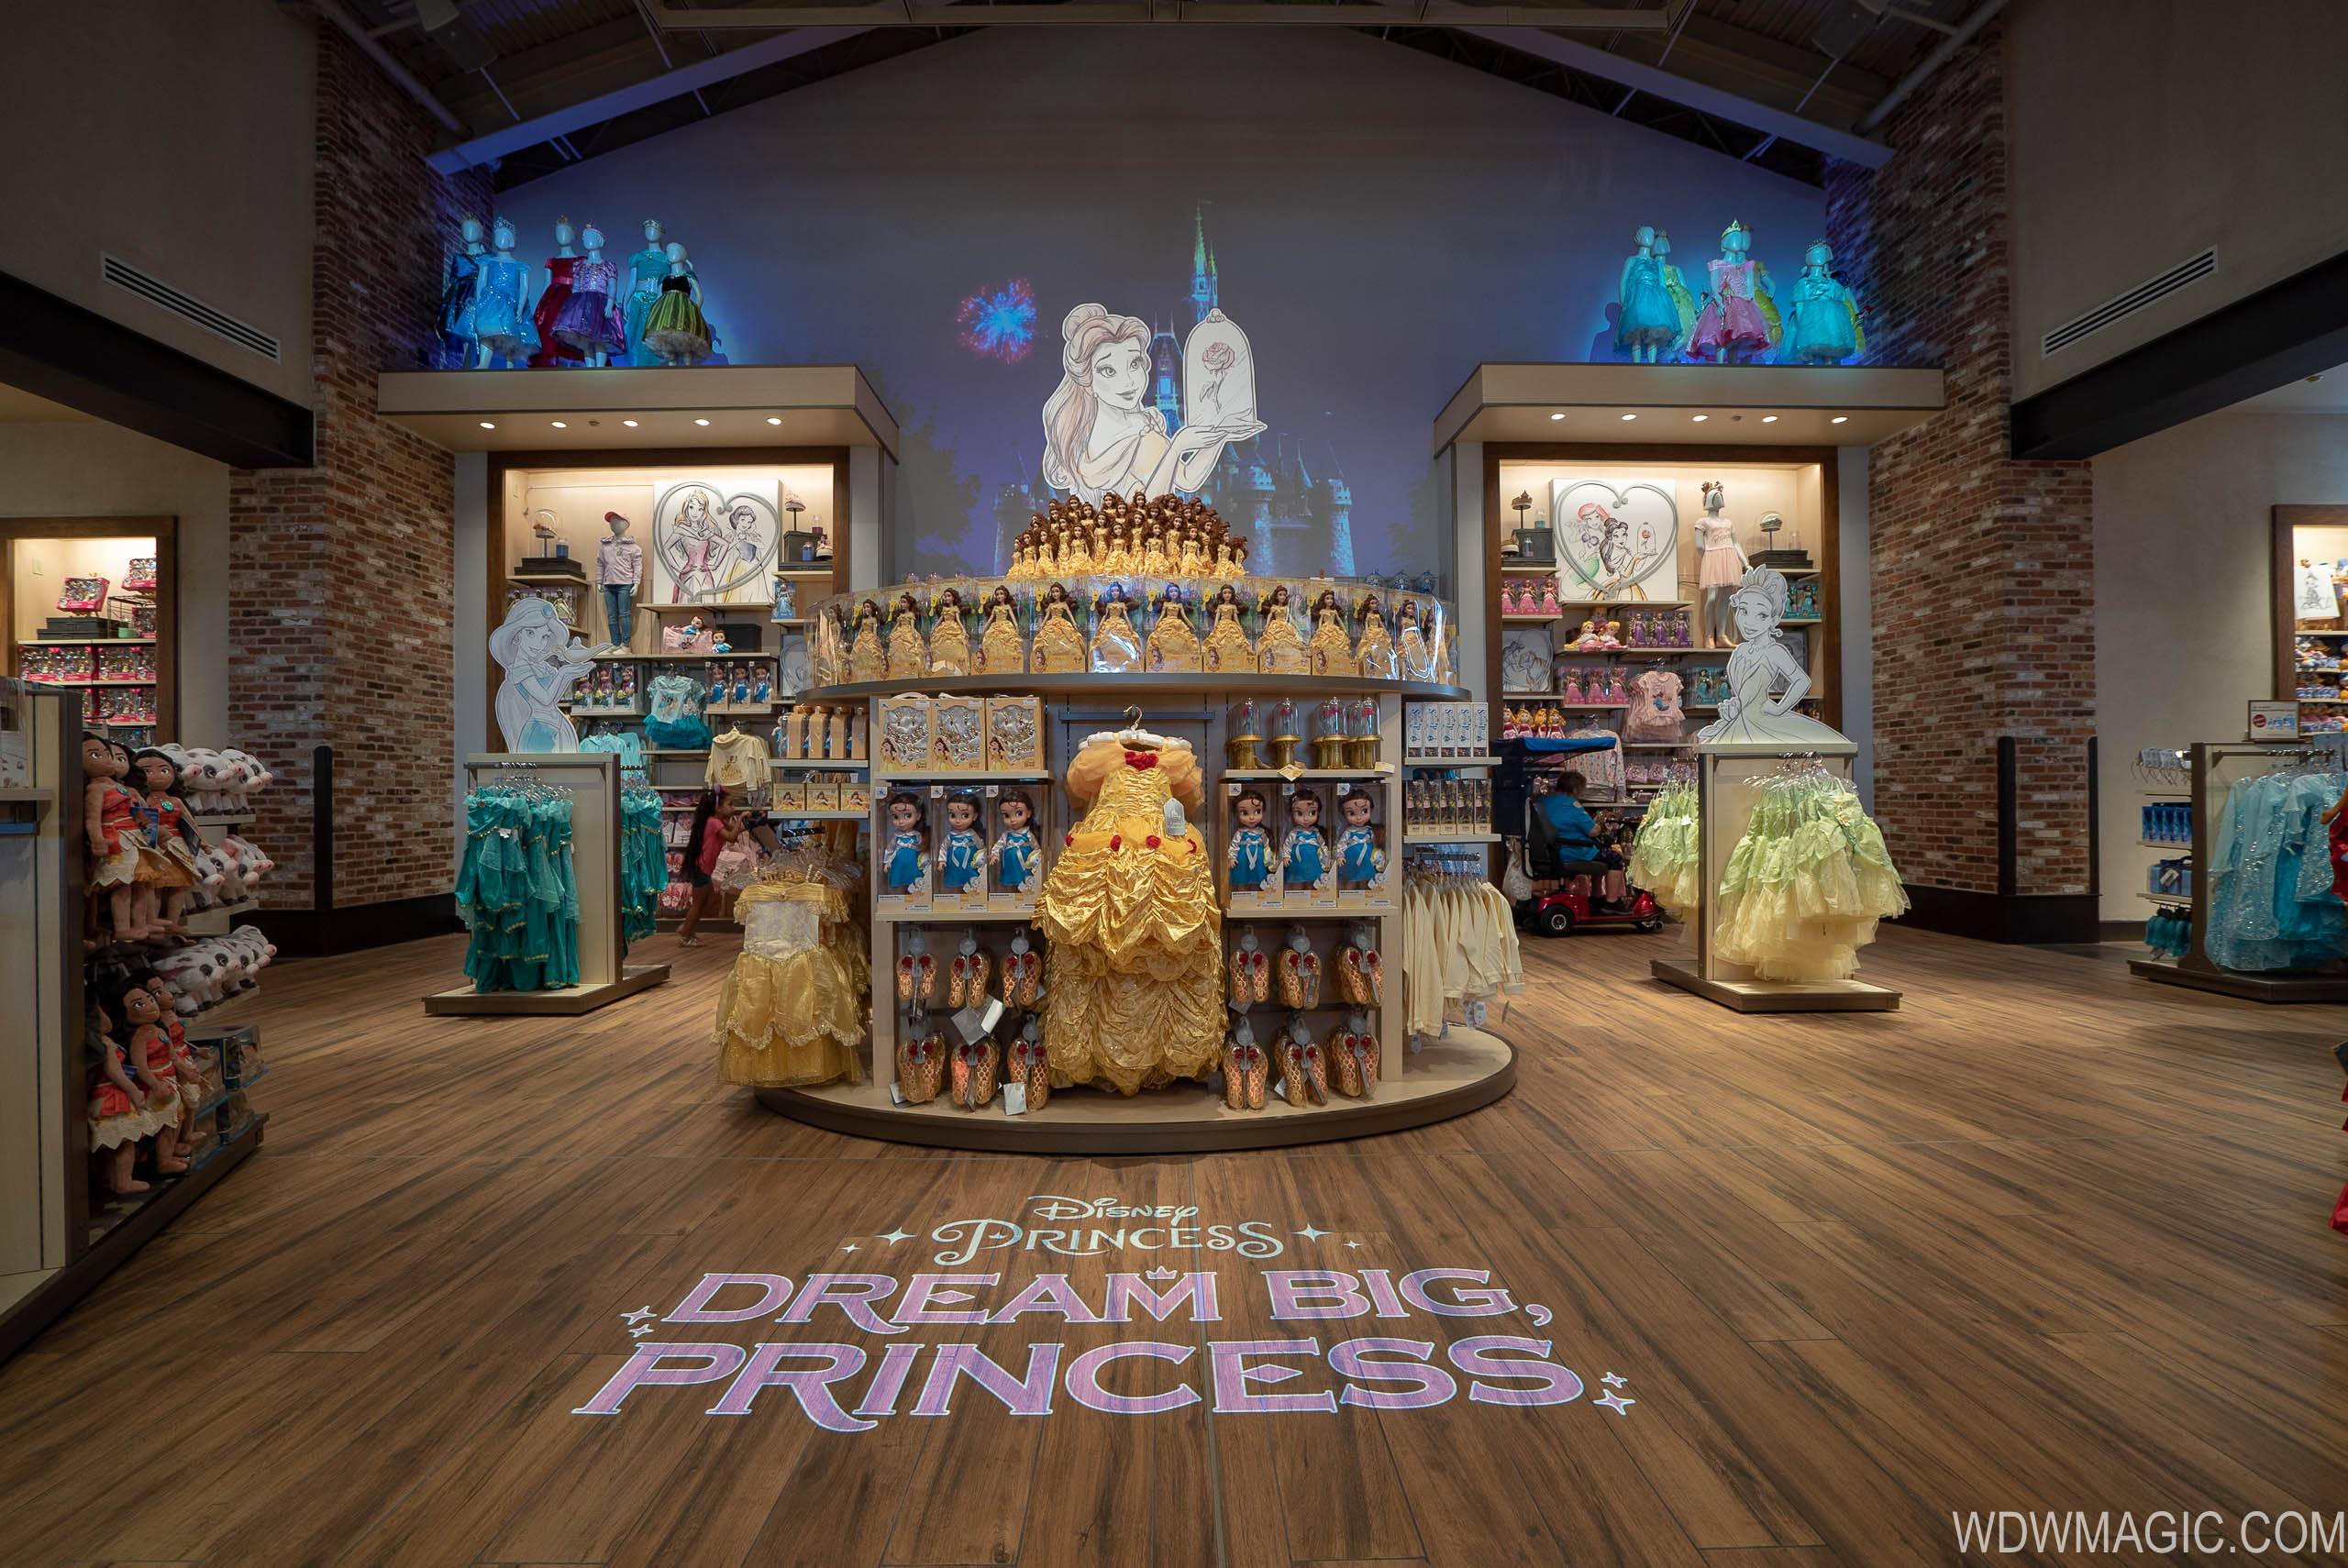 World of Disney Store, Shops